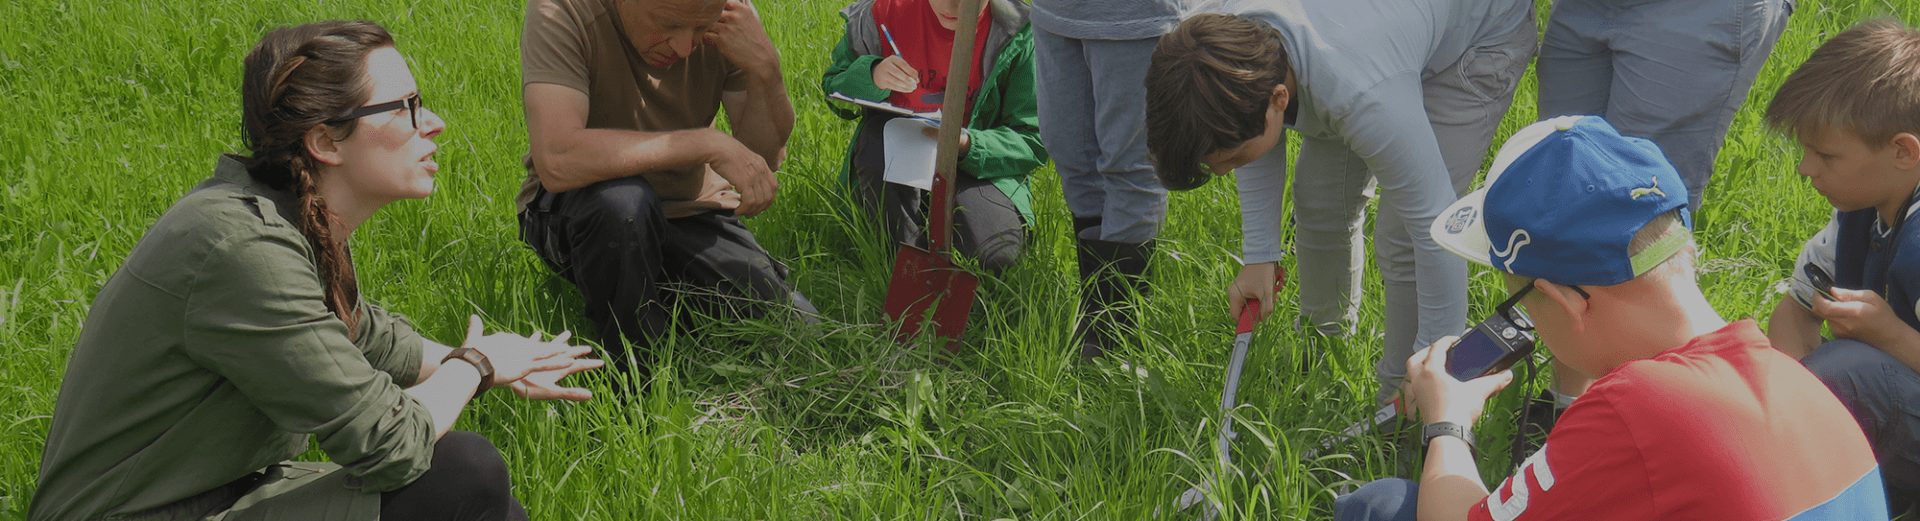 Enabling outdoor-based Teaching (E.O.T.)